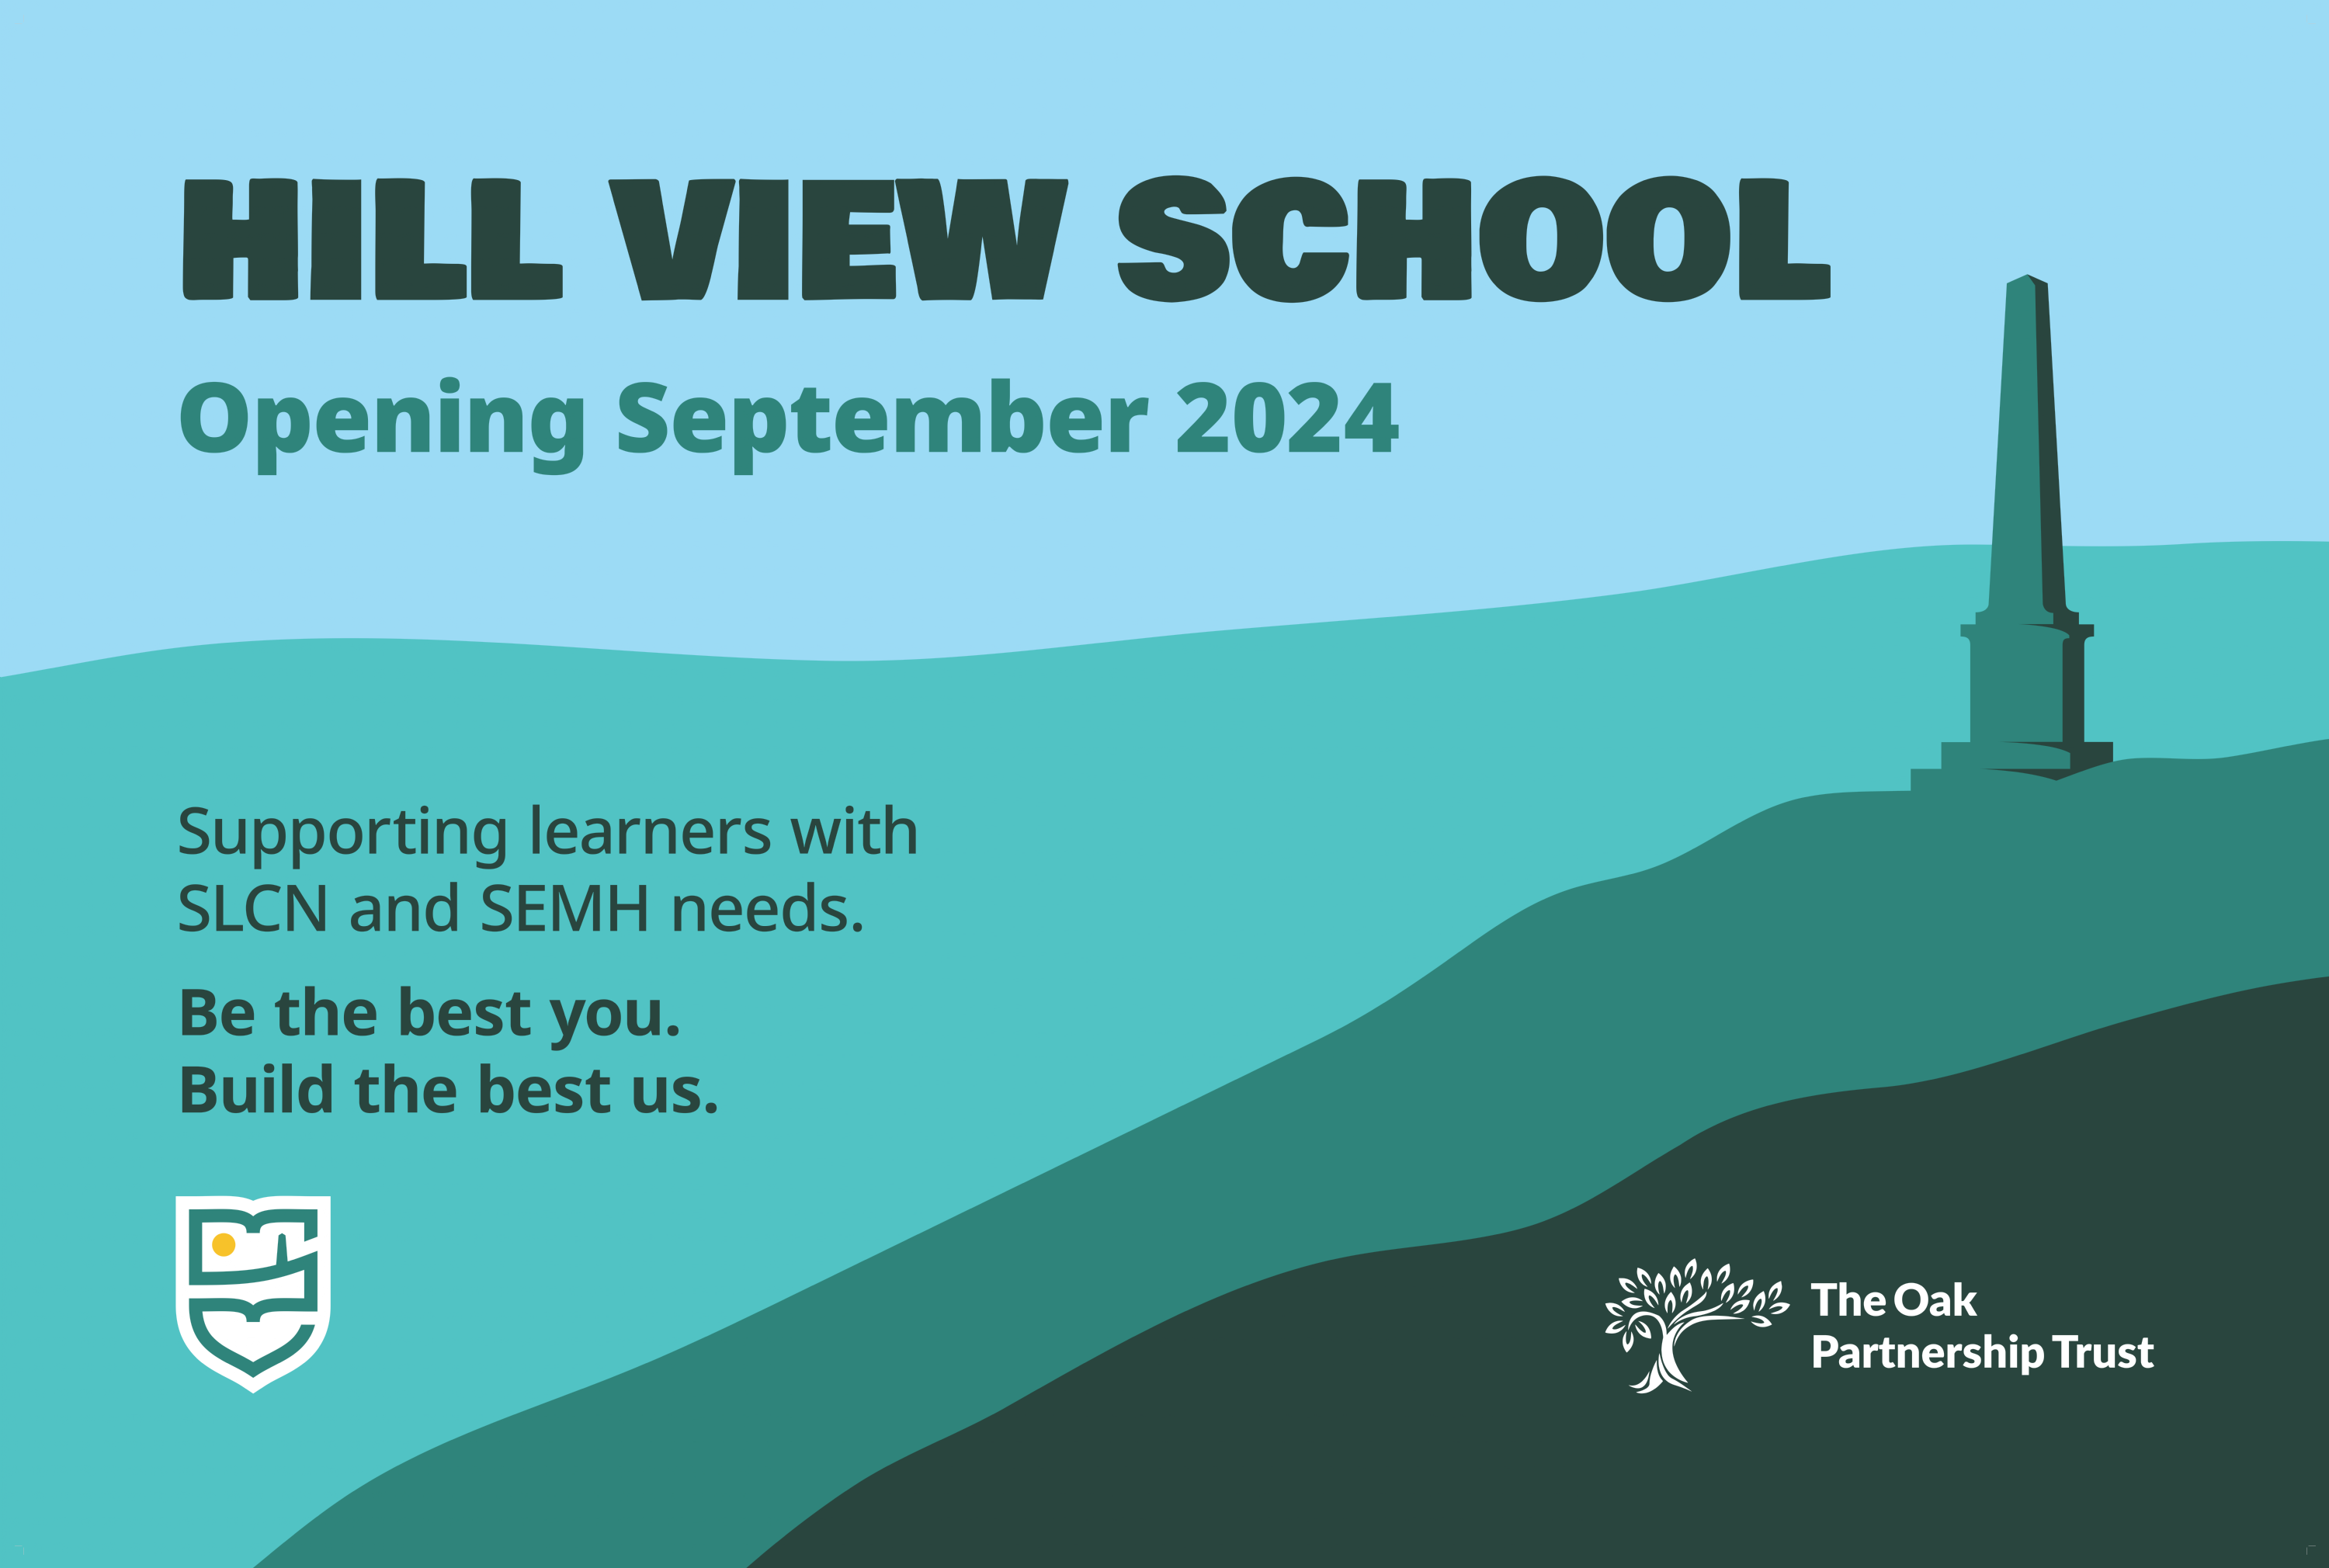 Hill View School welcome banner. School is opening September 2024